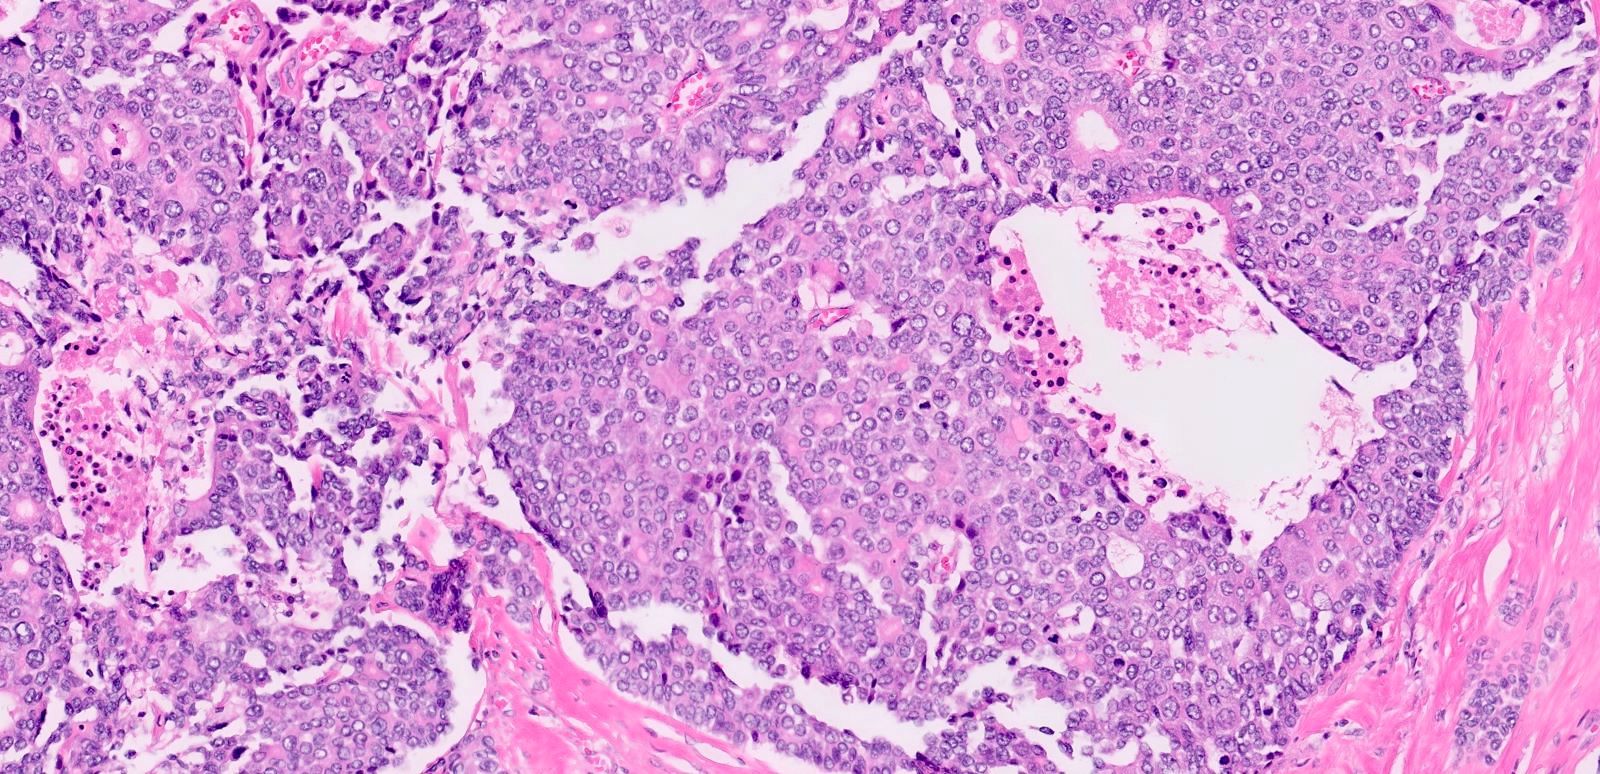 Neuroendocrine carcinoma component